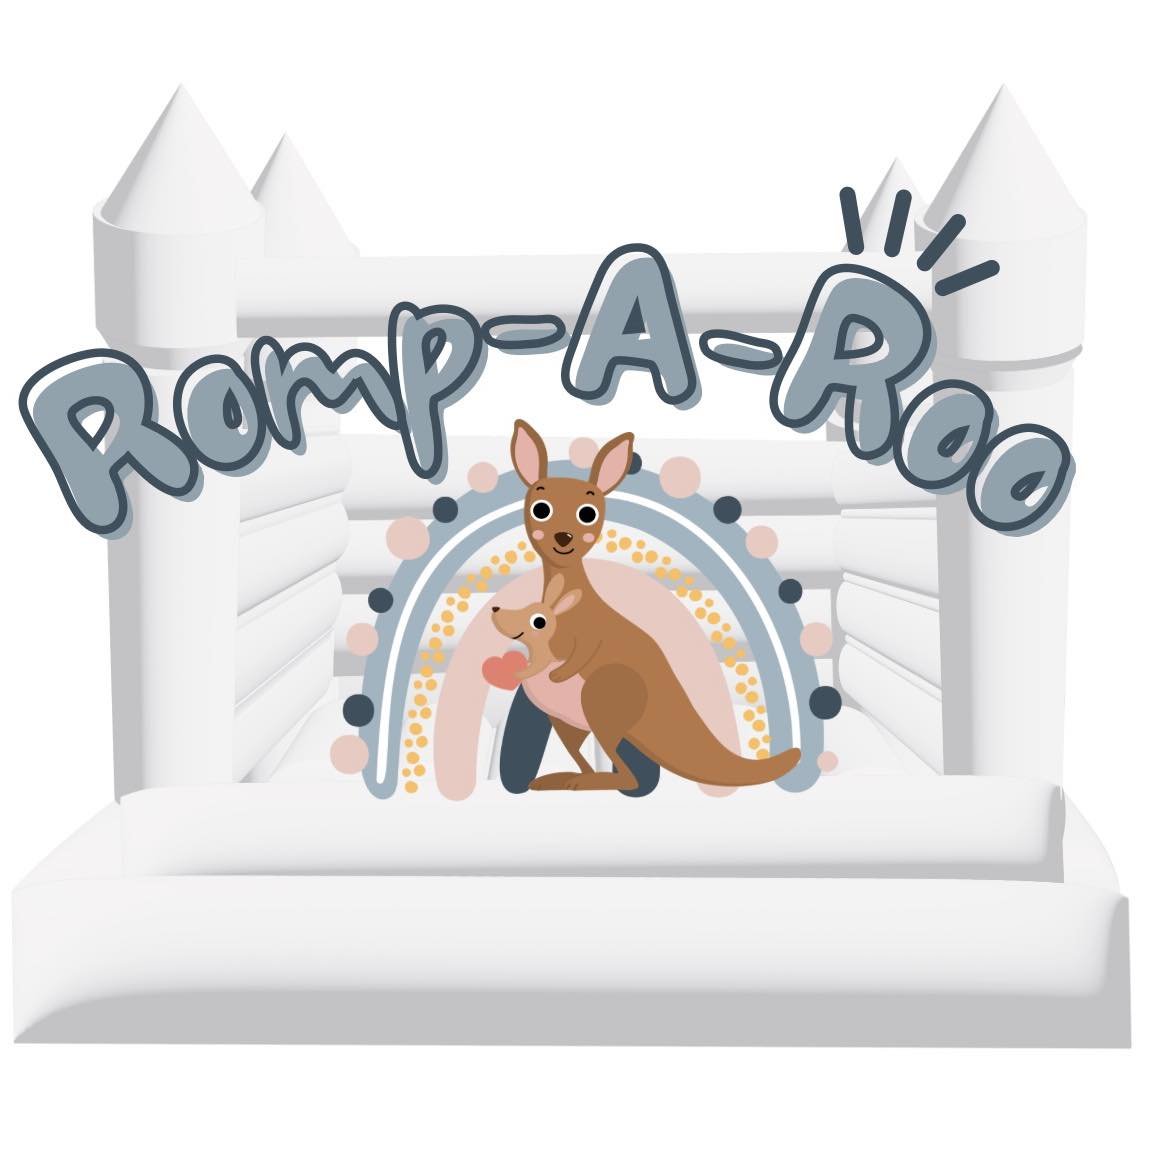 Romp-A-Roo